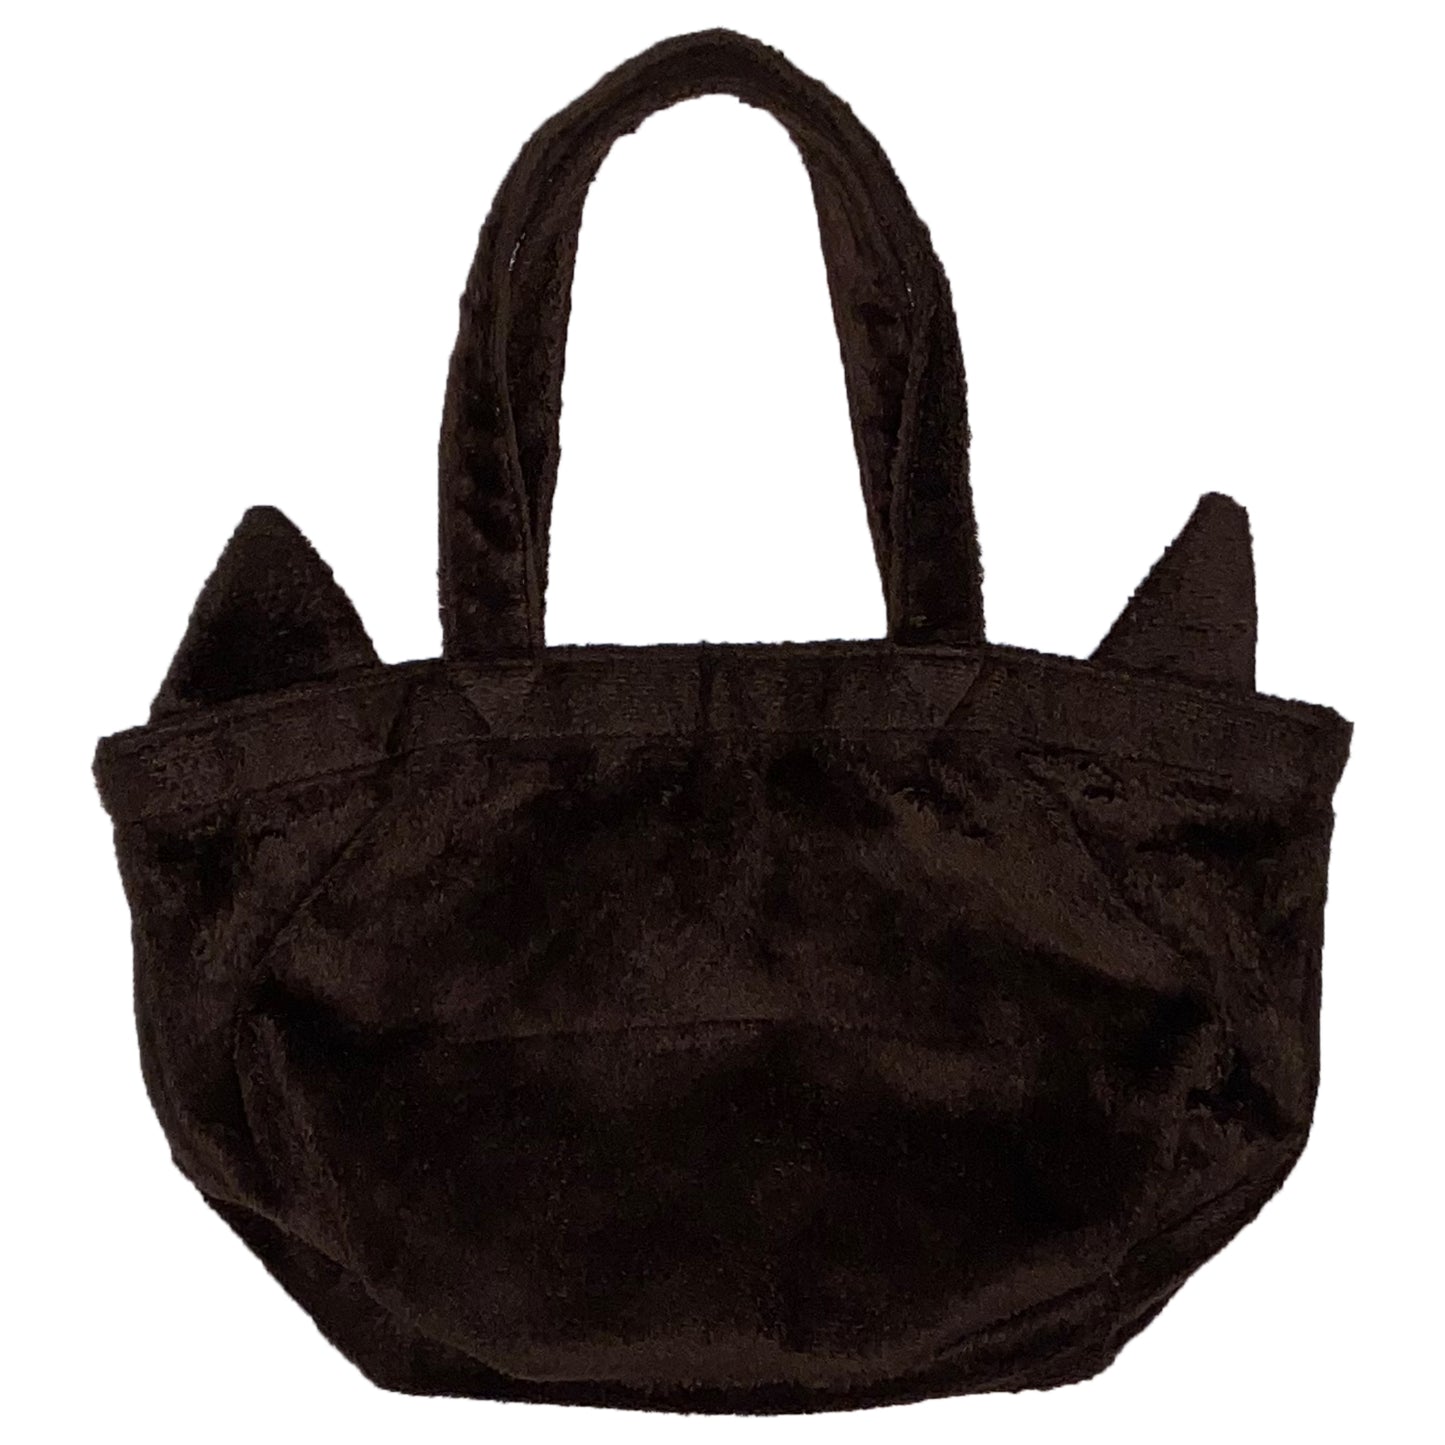 Né-Net Fleece Tote Bag